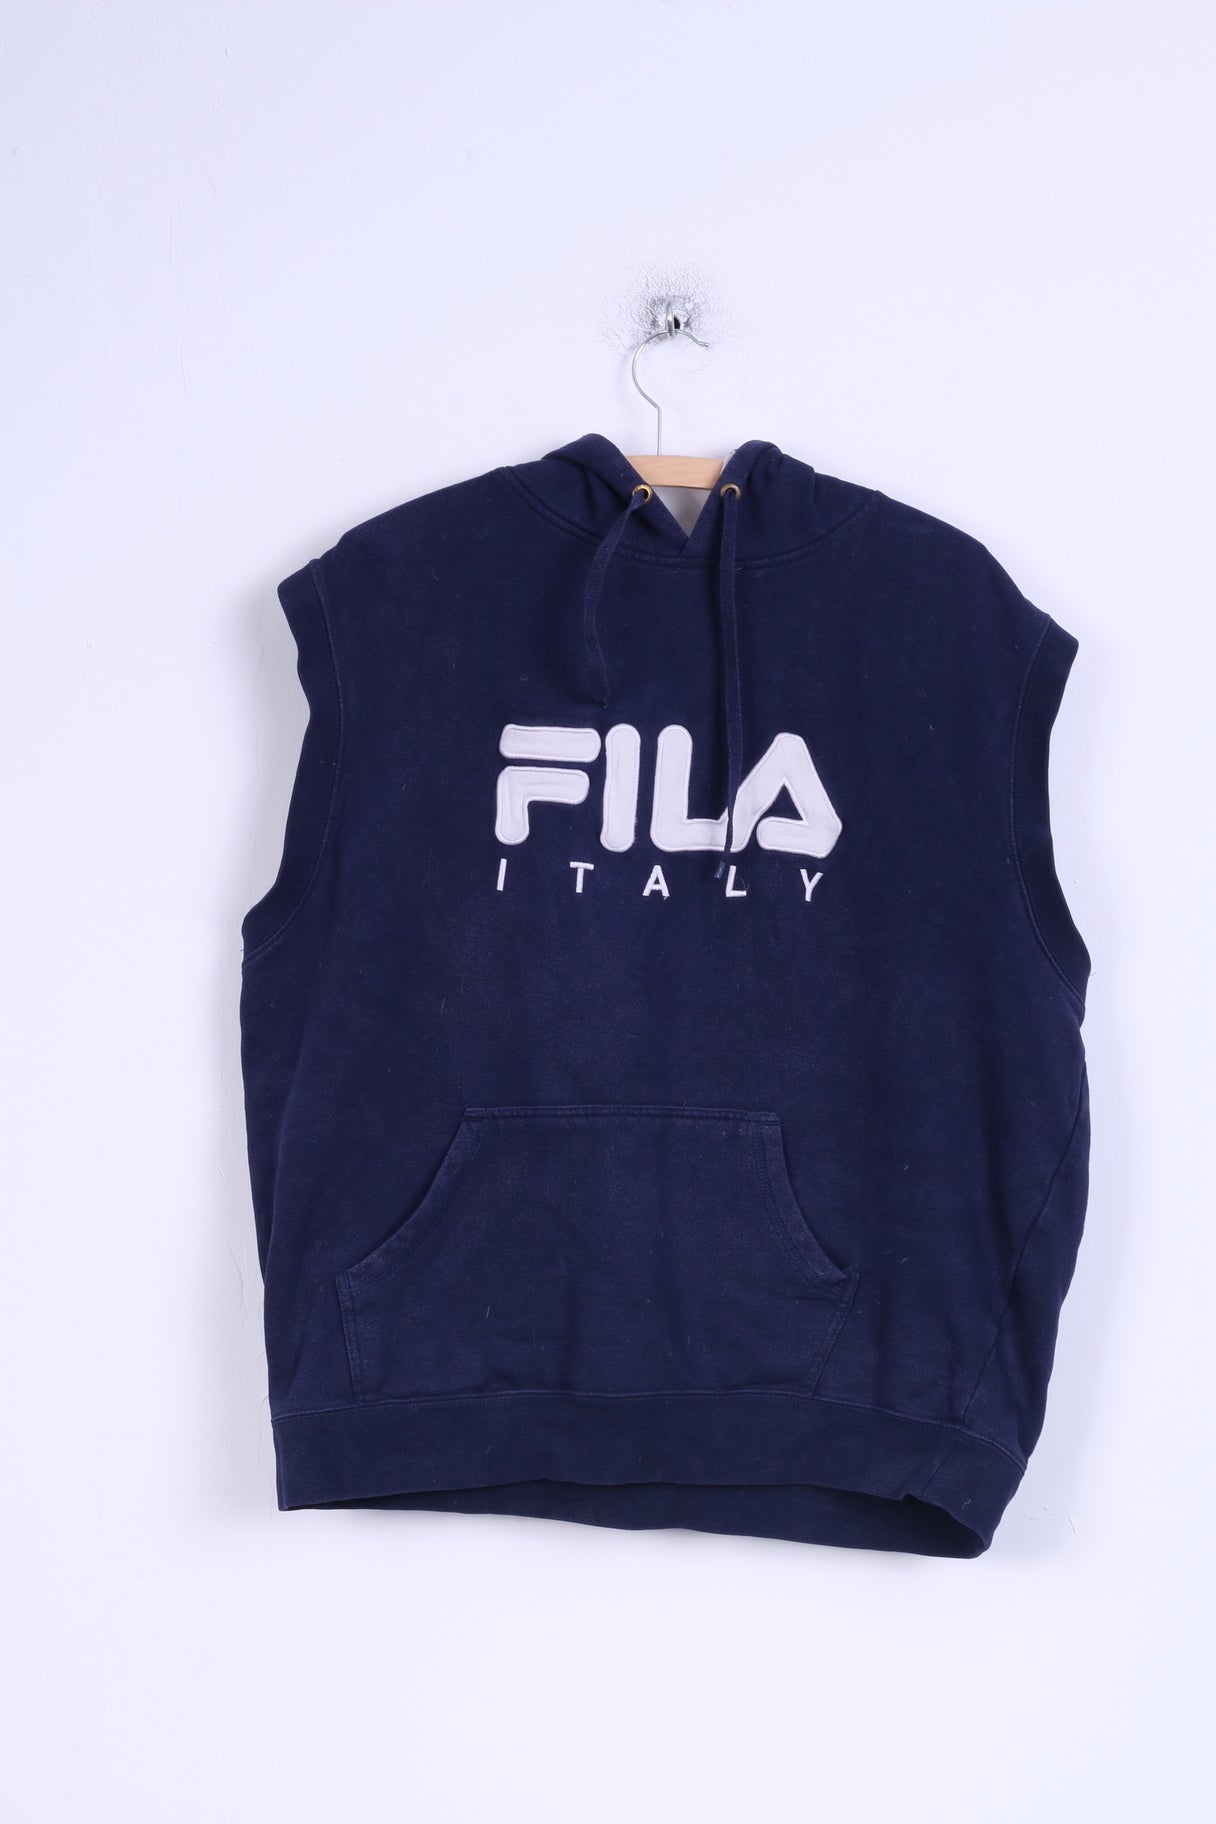 FILA Italy Mens XL Vest Blouse Navy Cotton Hoodie Top